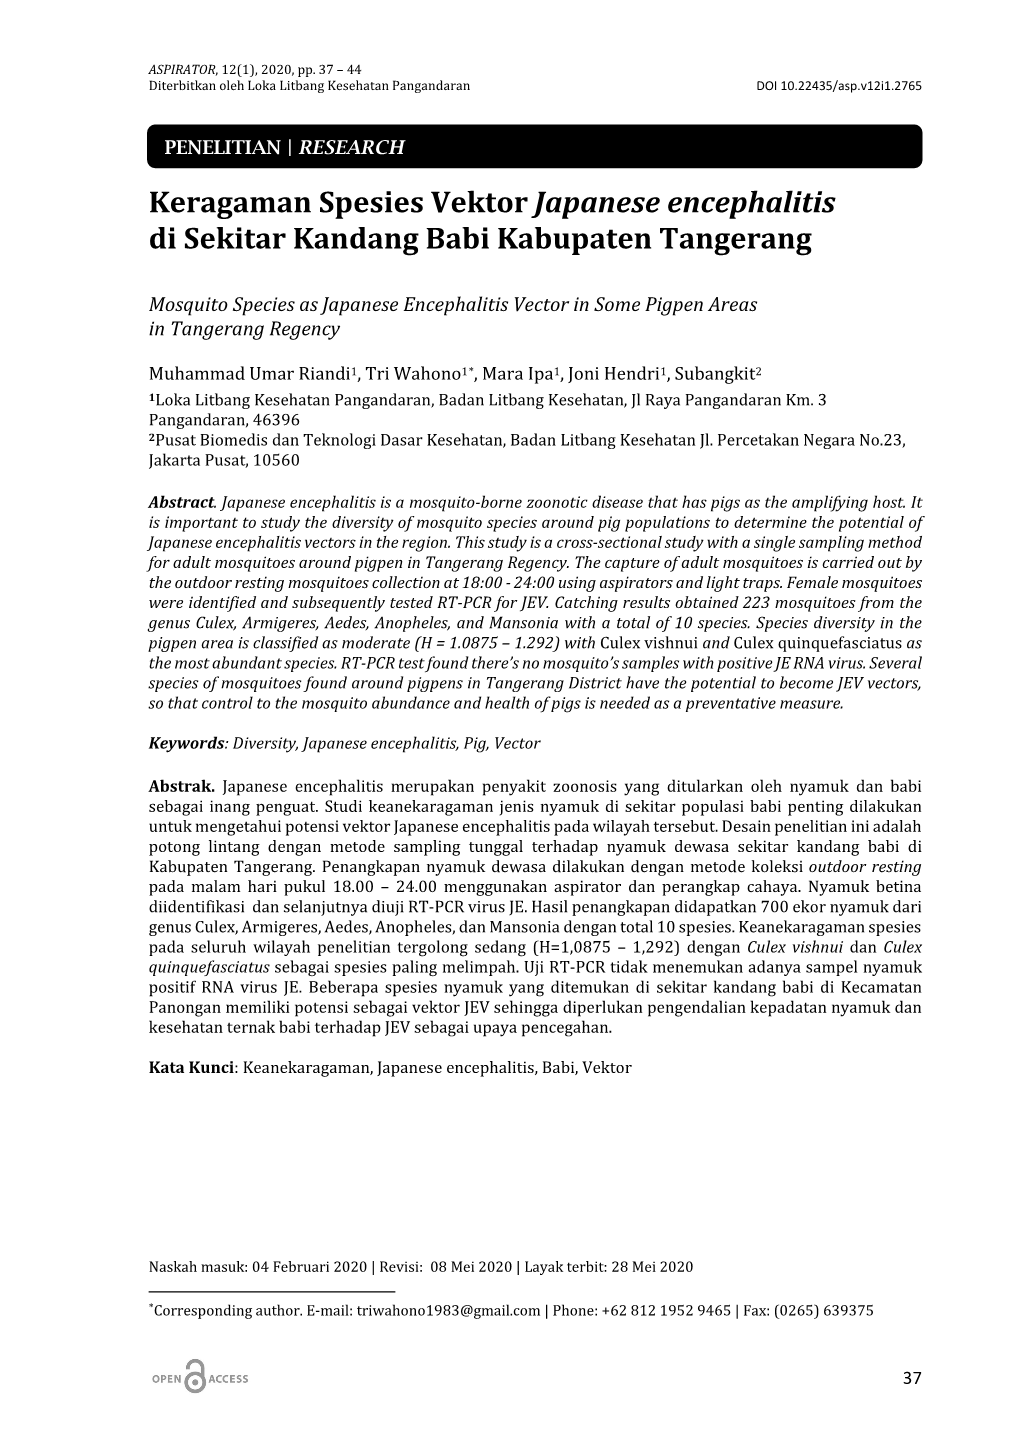 Keragaman Spesies Vektor Japanese Encephalitis Di Sekitar Kandang Babi Kabupaten Tangerang